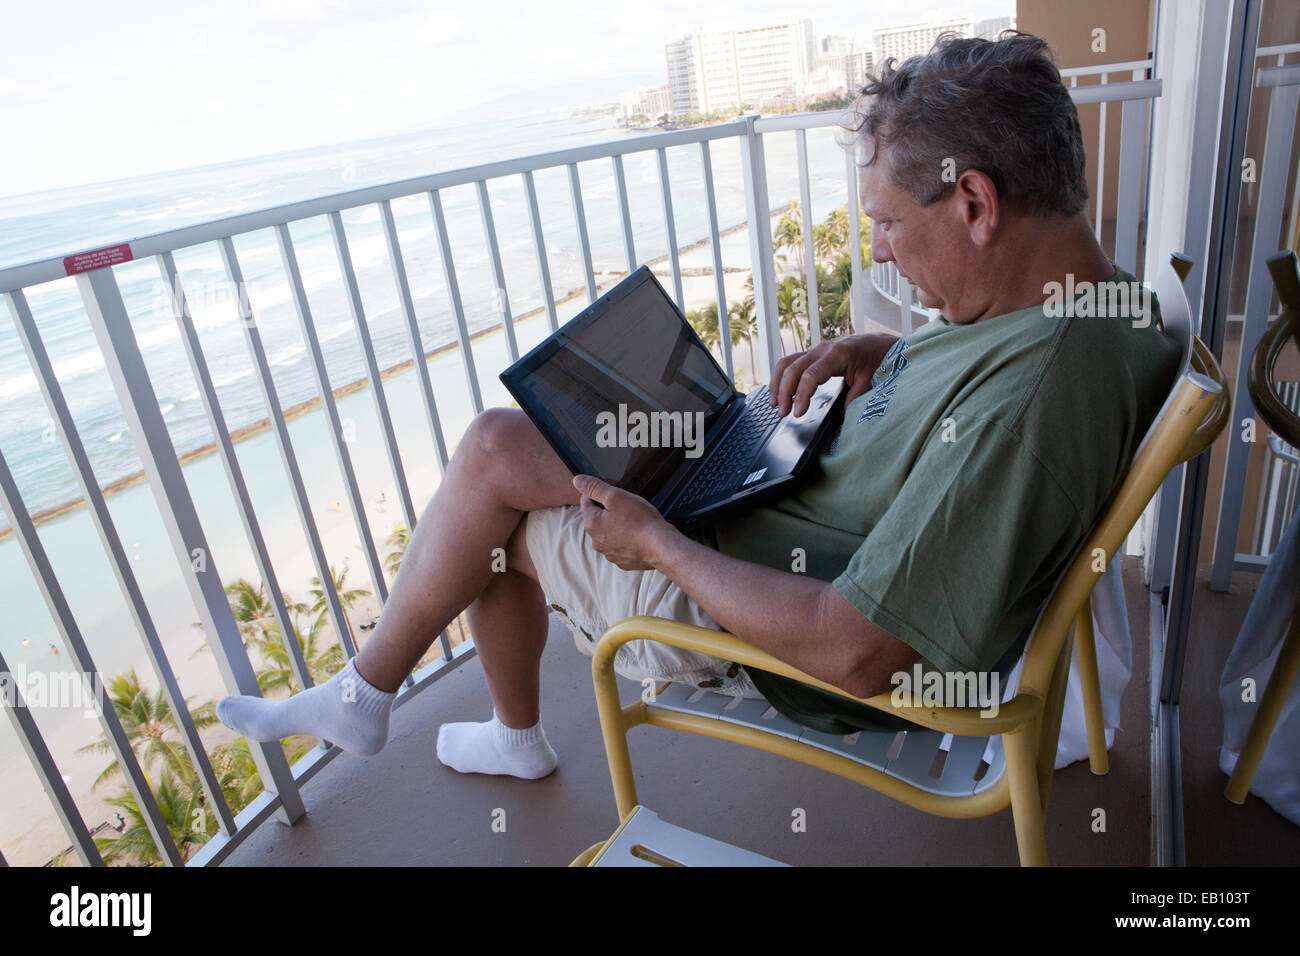 Hotel guest surfs the internet on balcony overlooking ocean, Oahu, Hawaii Stock Photo